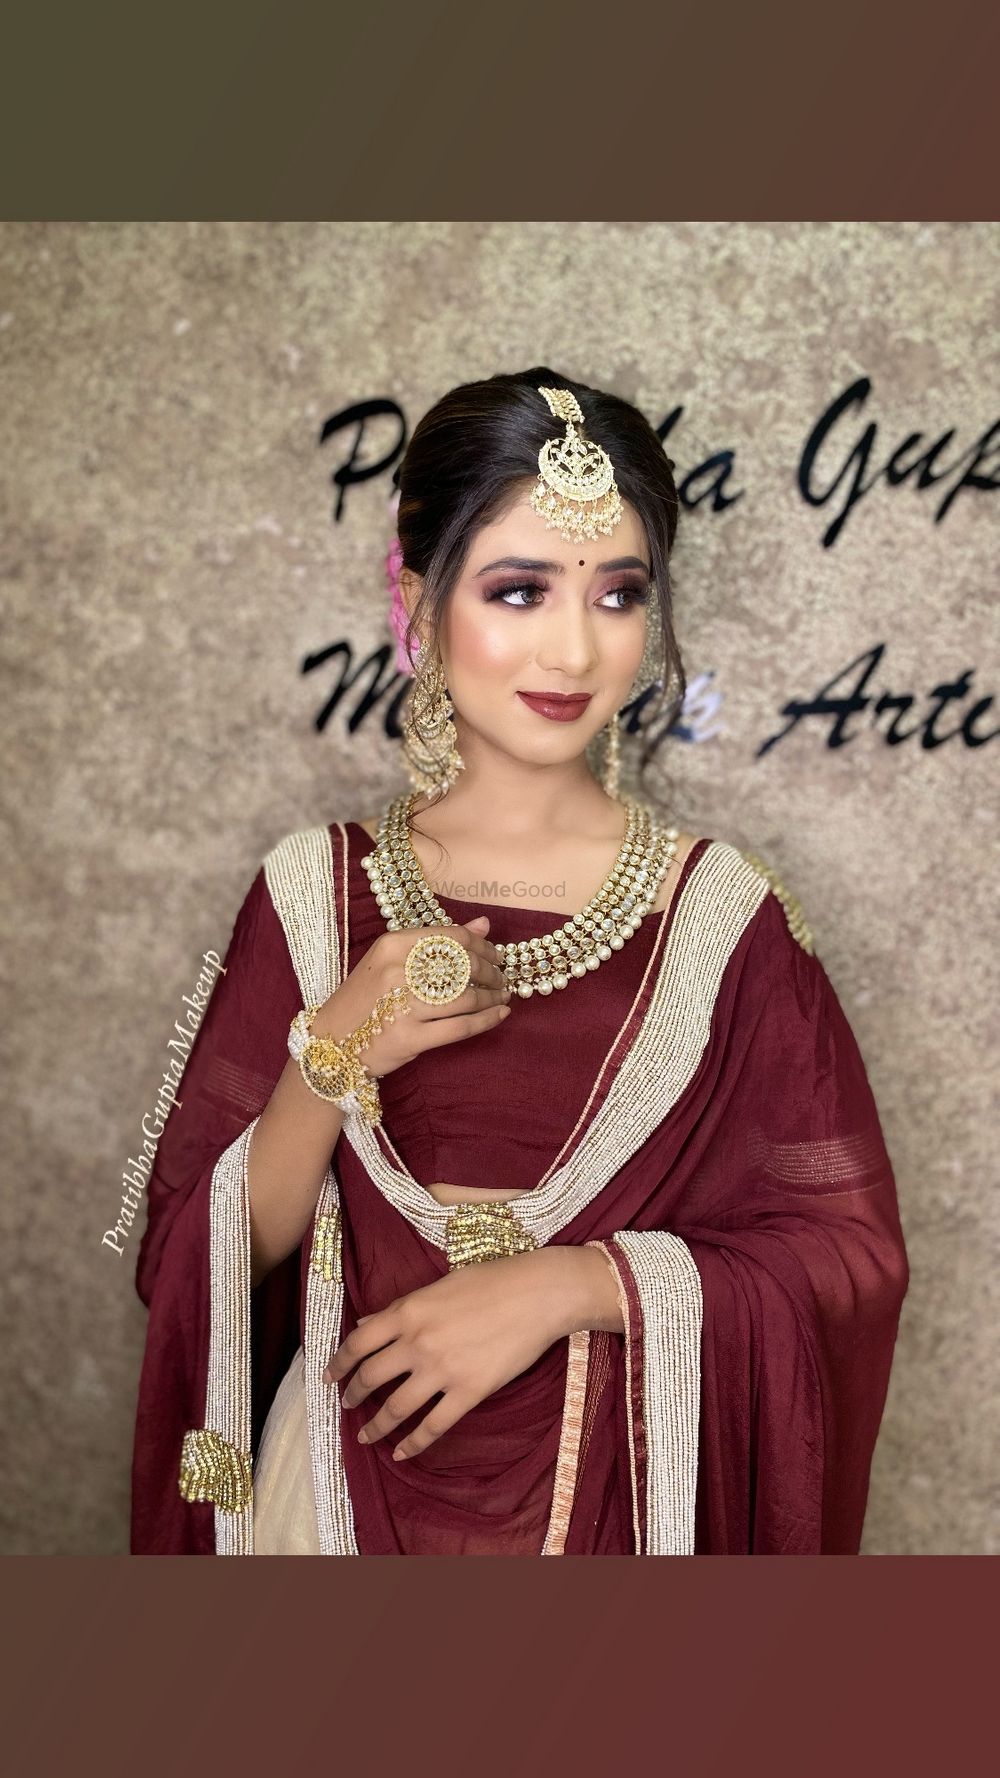 Photo By Pratibha Gupta Makeup Artist - Bridal Makeup